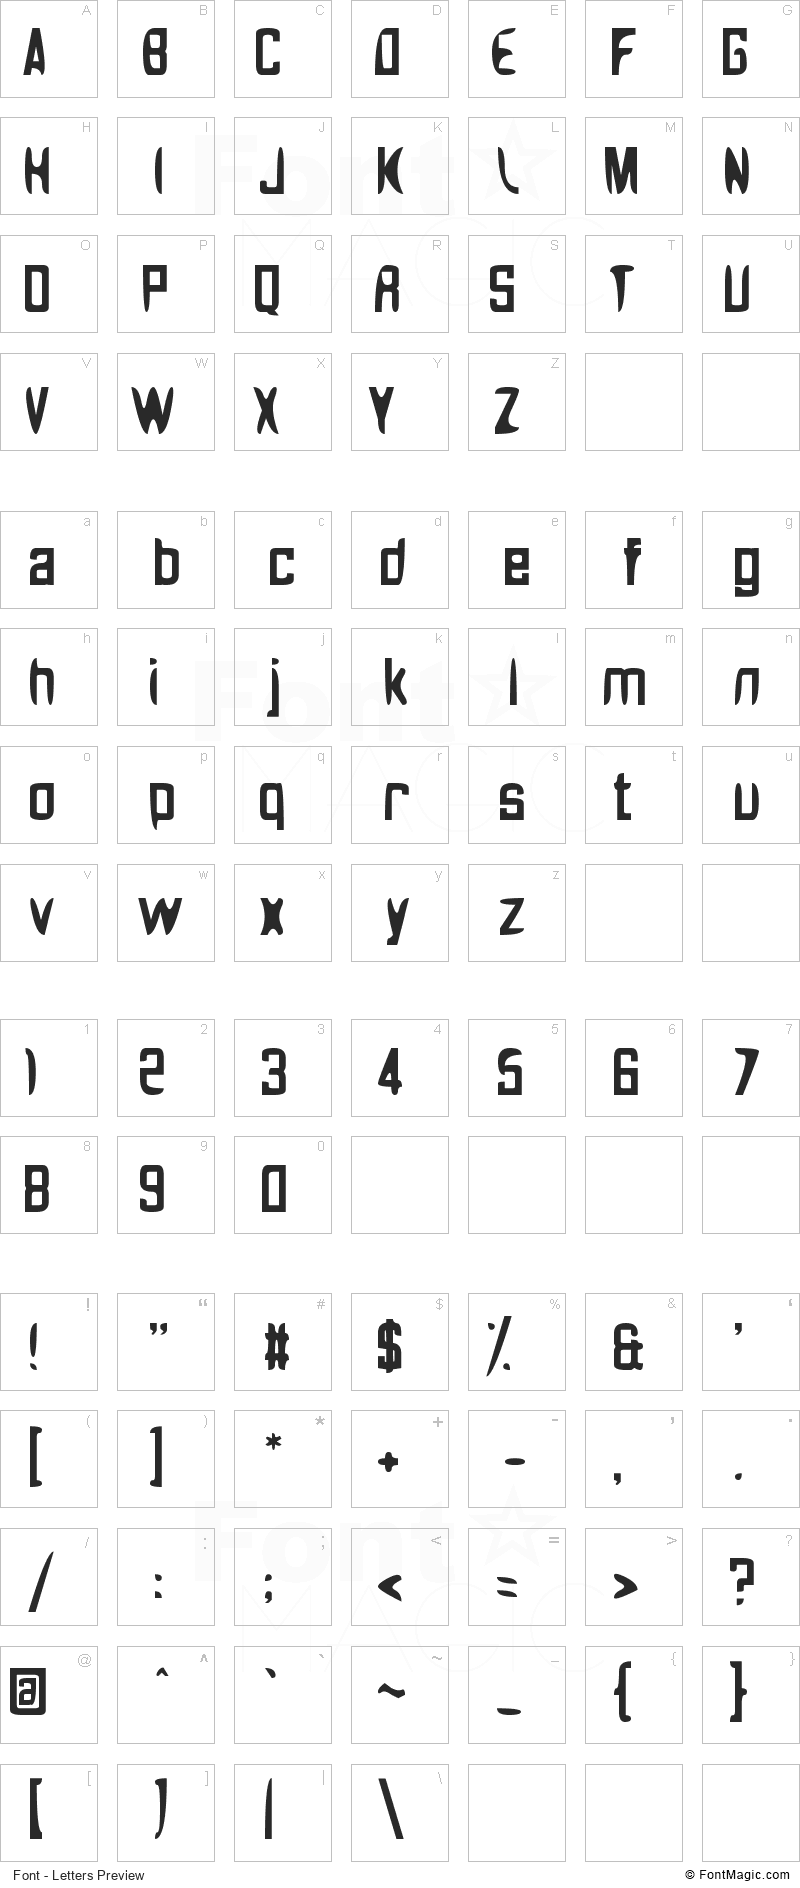 Noasarck Quattro Font - All Latters Preview Chart